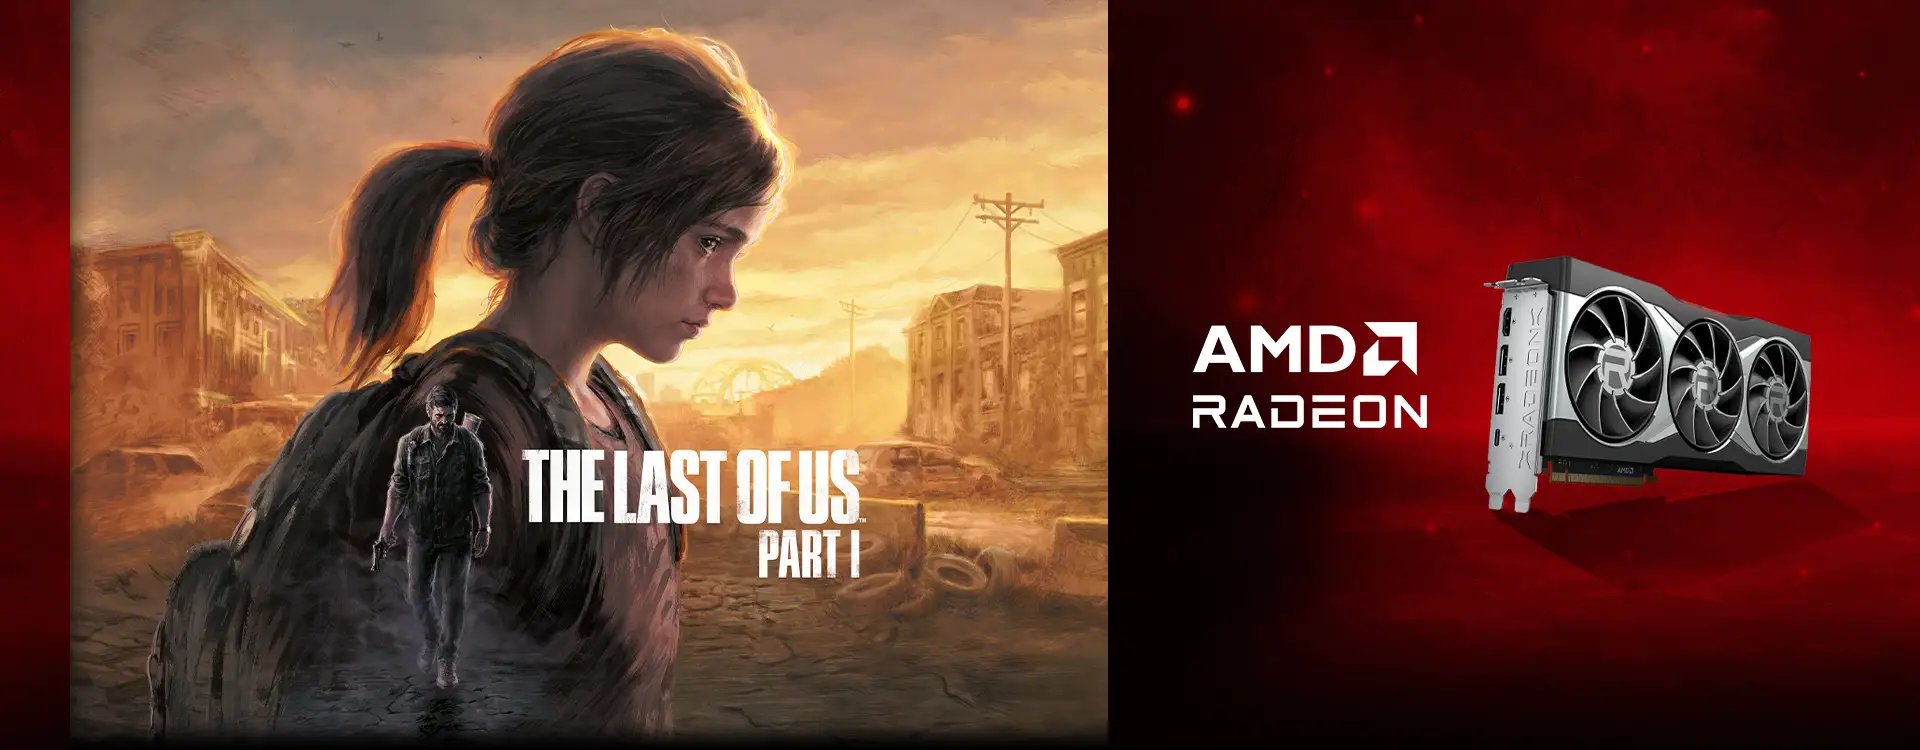 The Last of Us - AMD Radeon